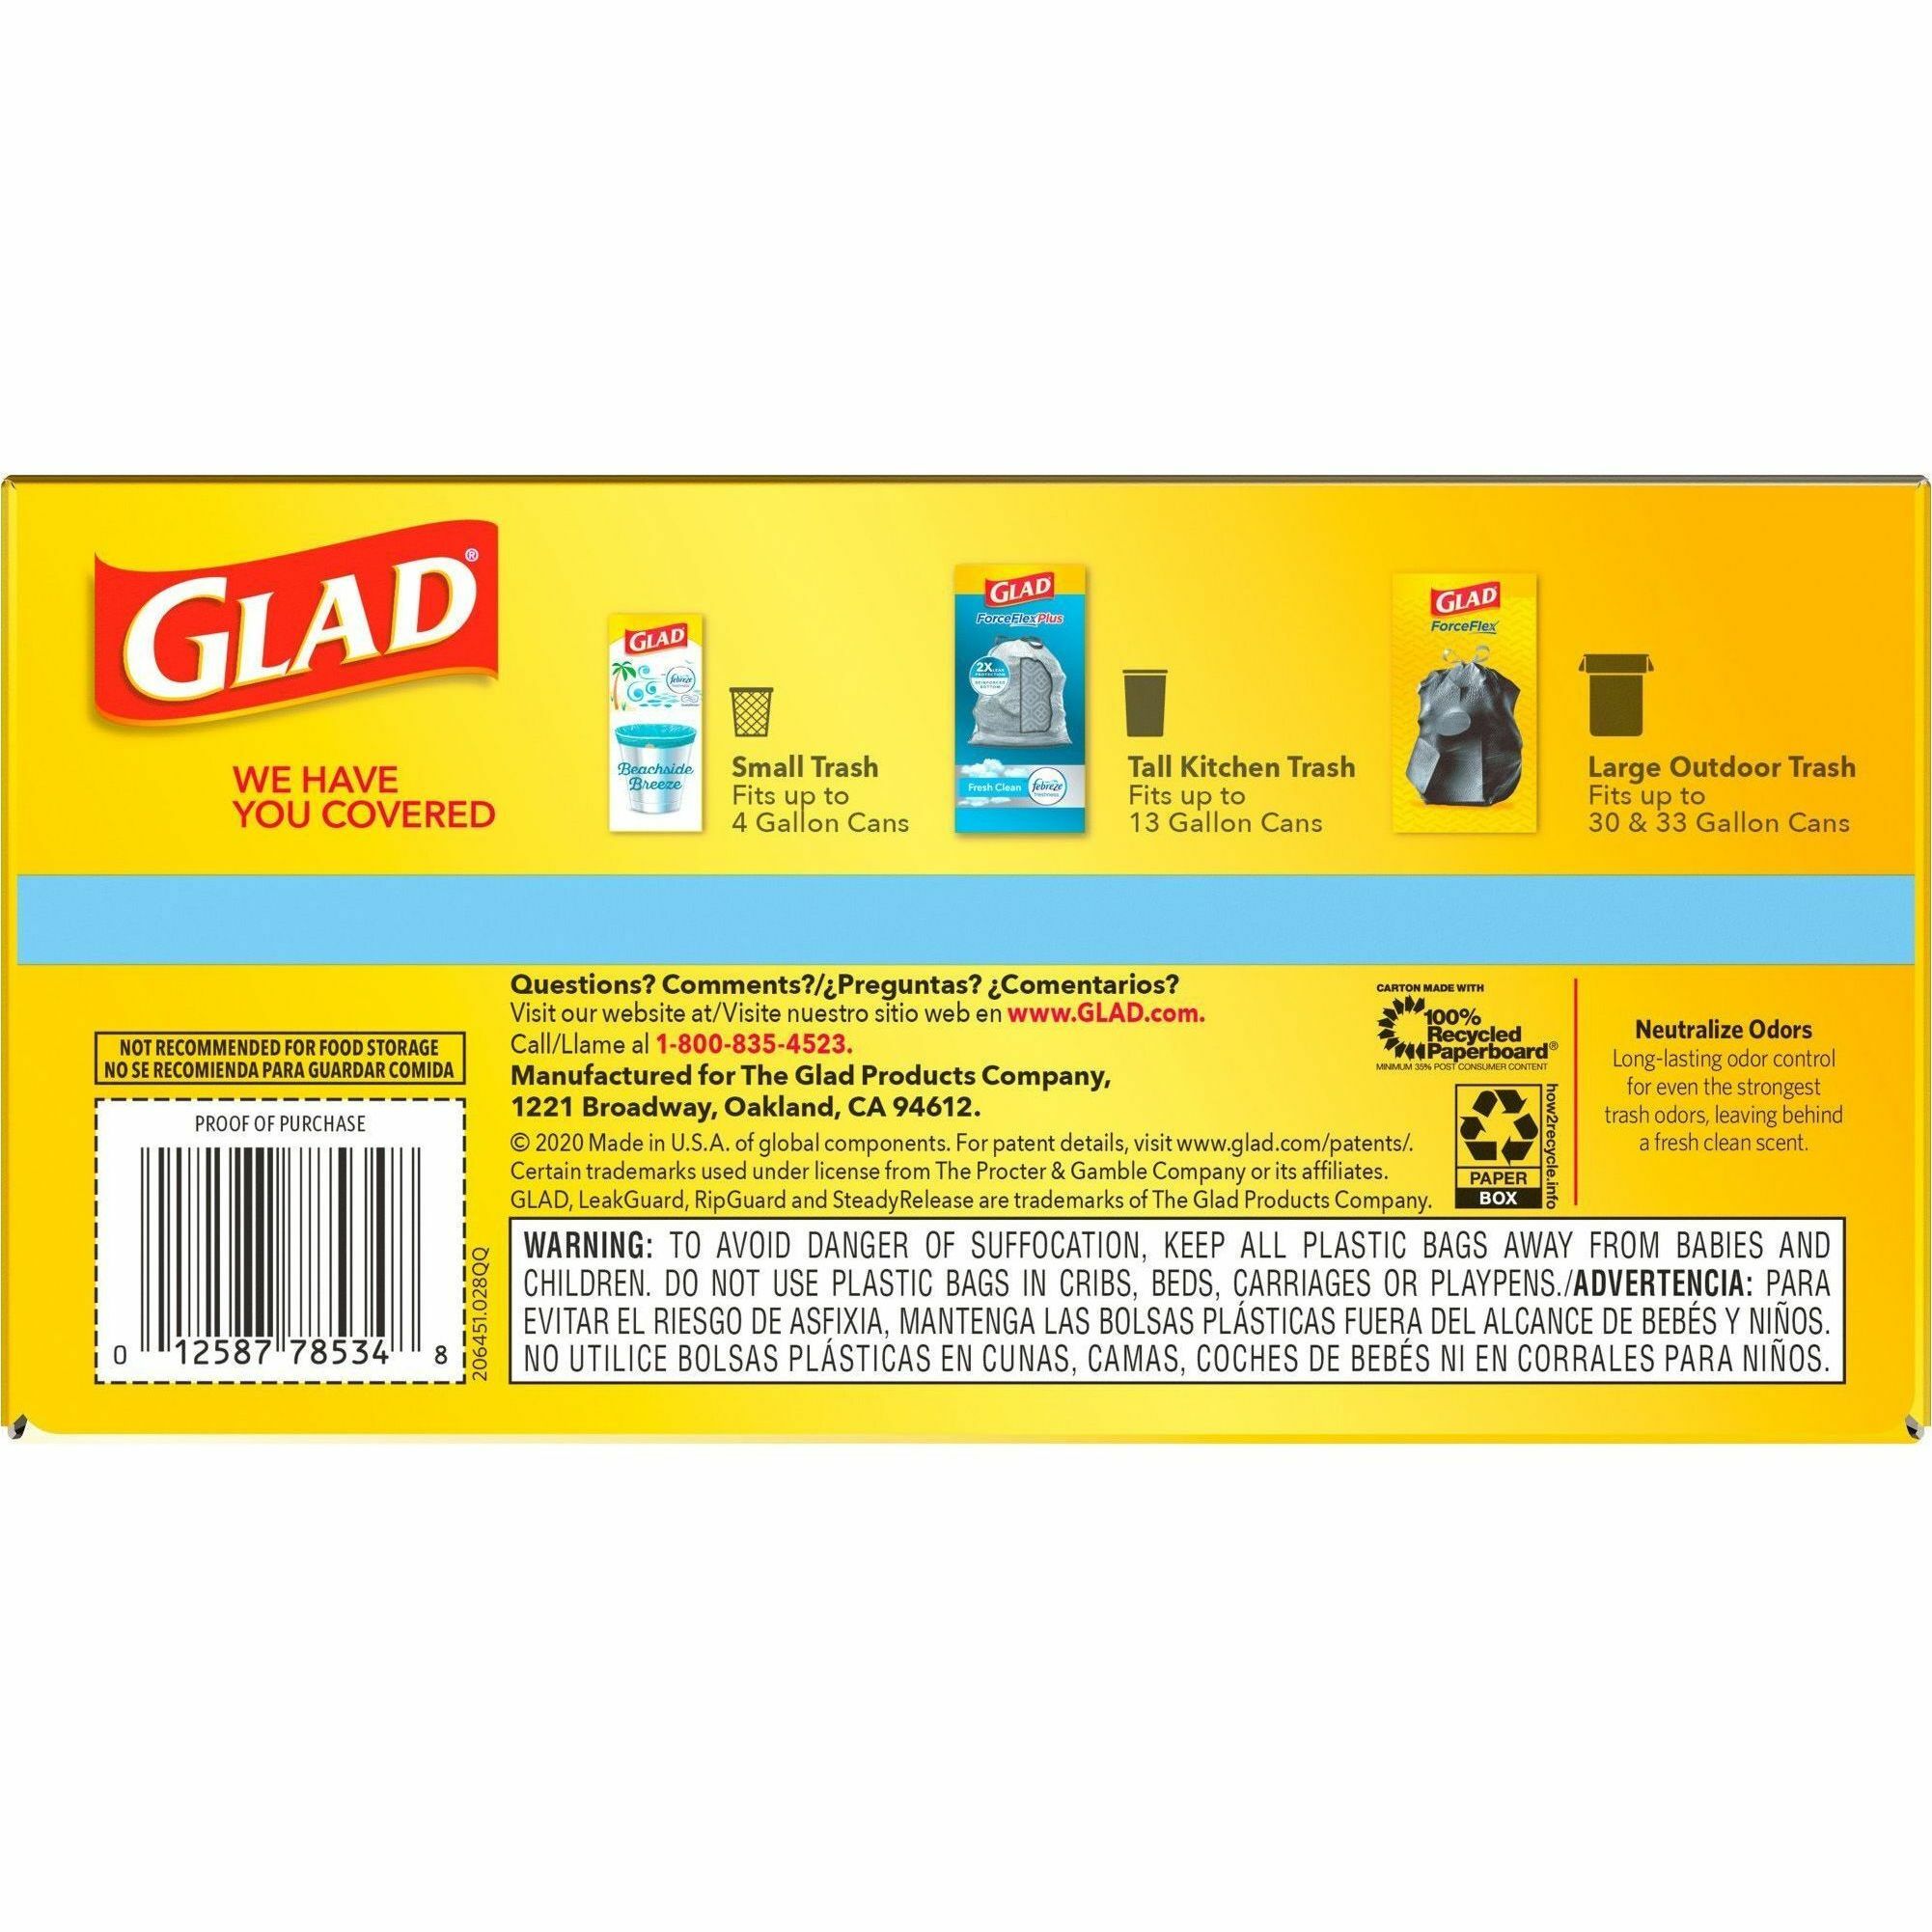 FORCEFLEX ODORSHIELD TALL KITCHEN DRAWSTRING BAGS by Glad® CLO78714CT